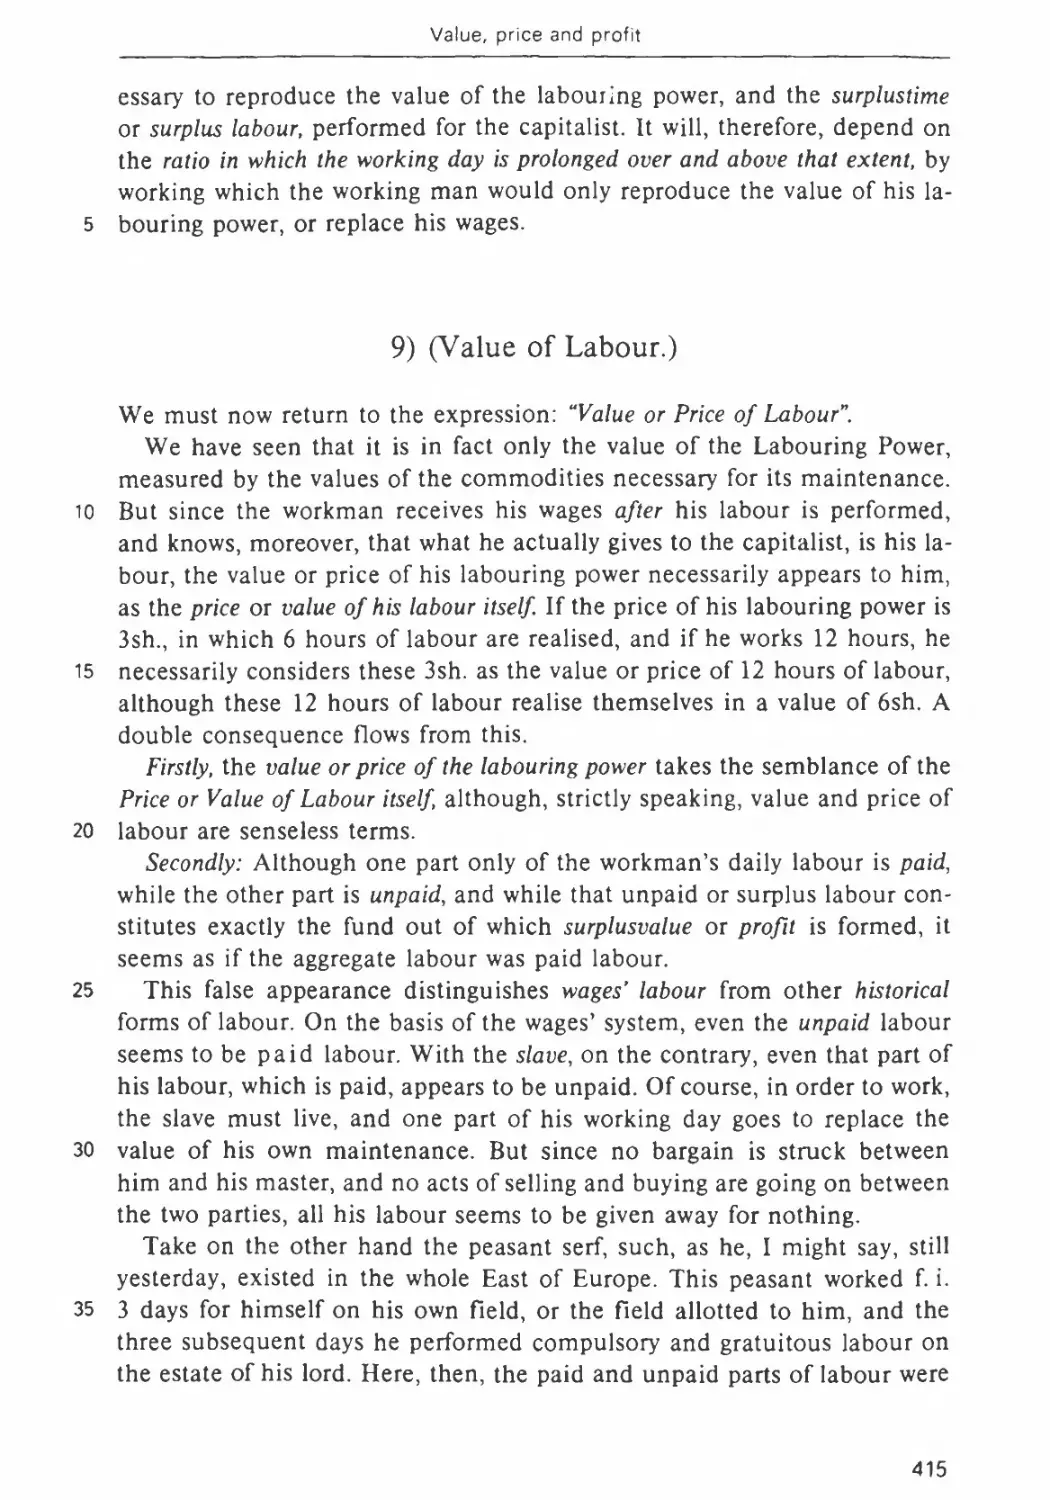 9. Value of Labour